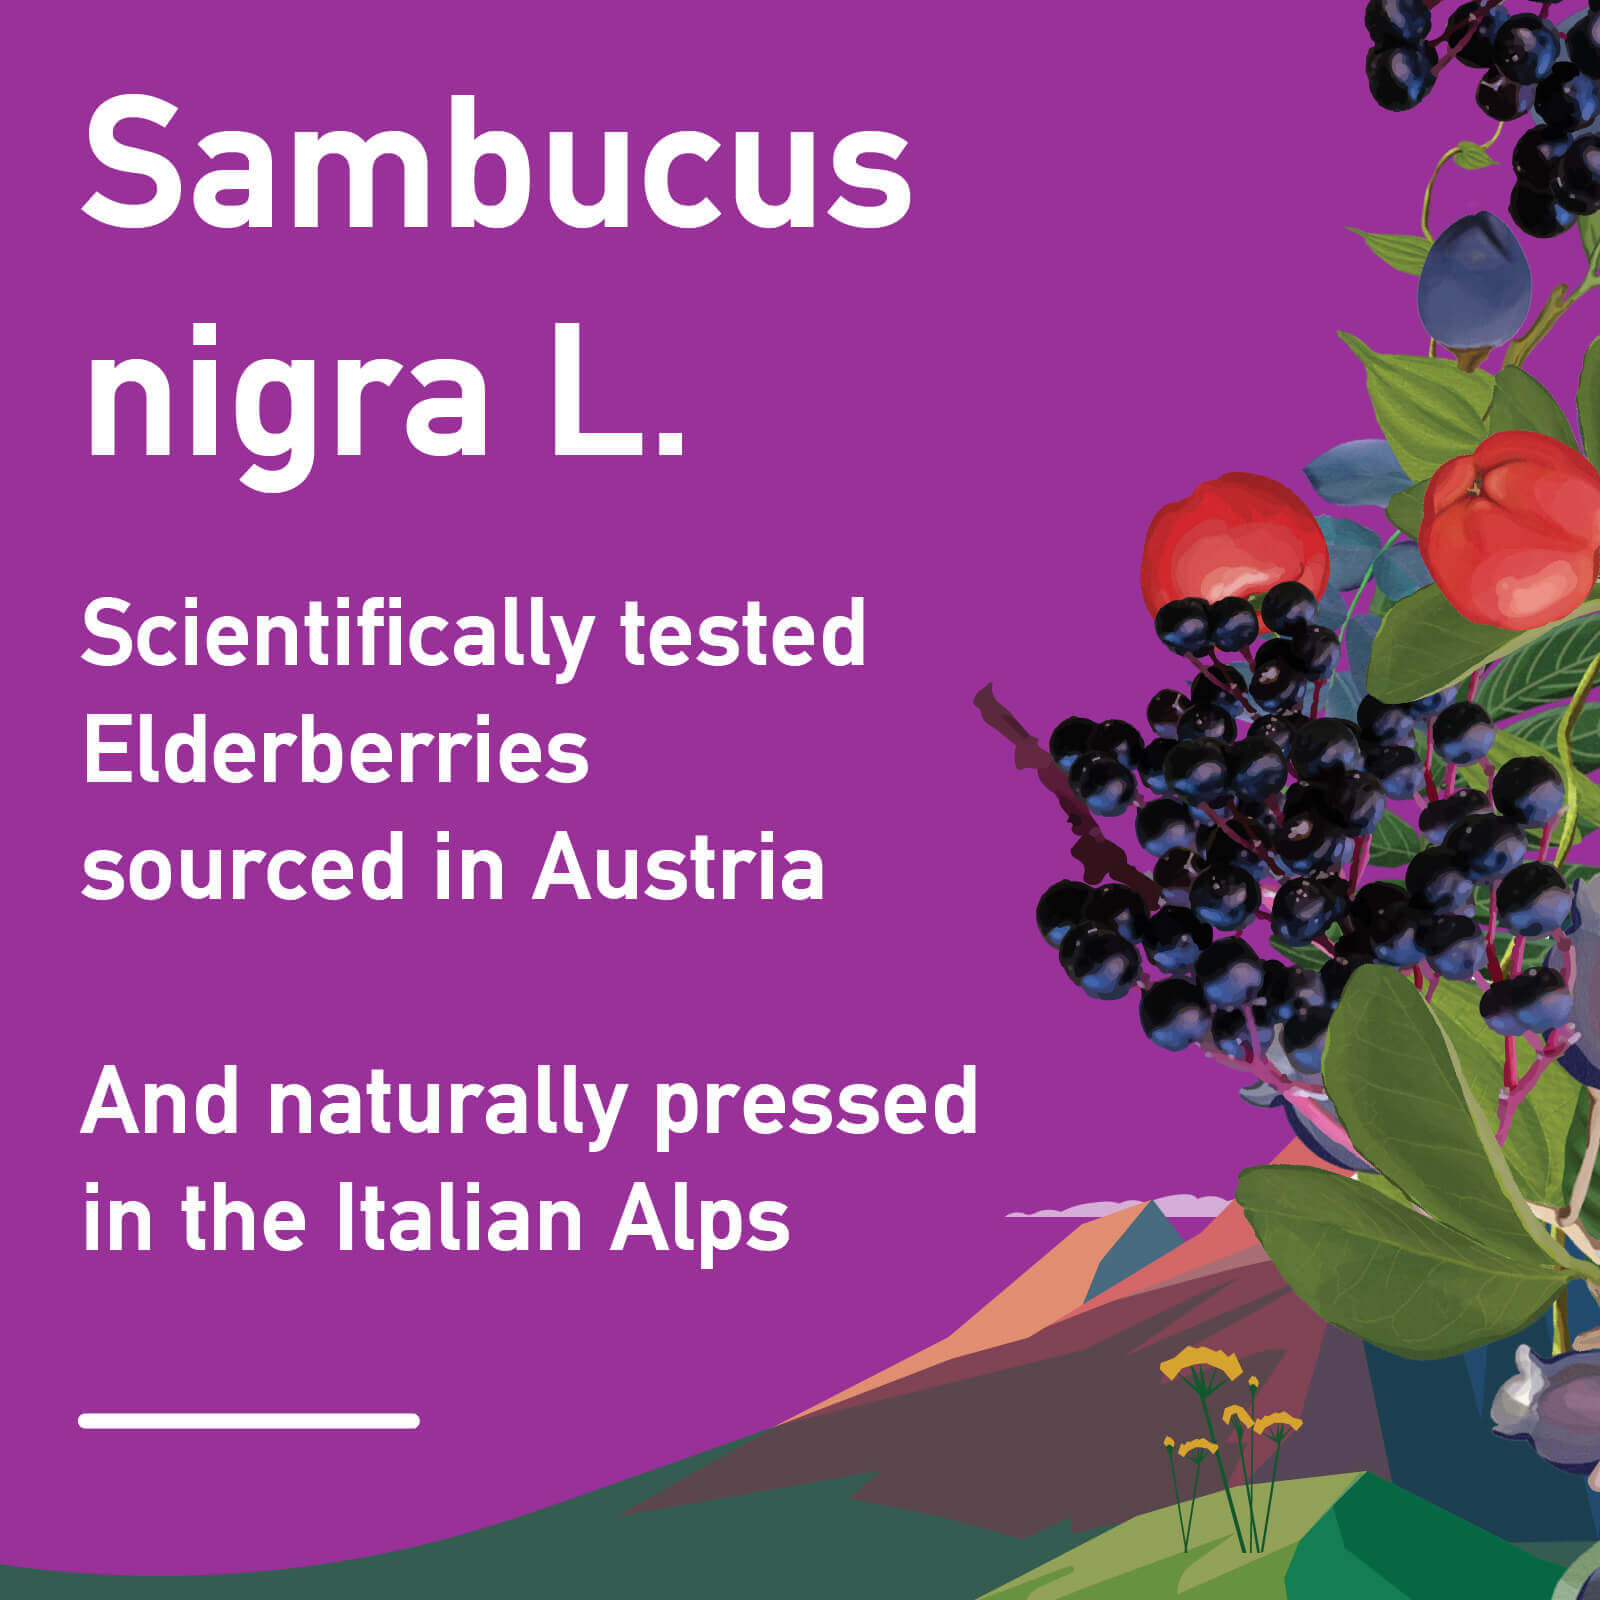 Scientifically studied elderberry extract